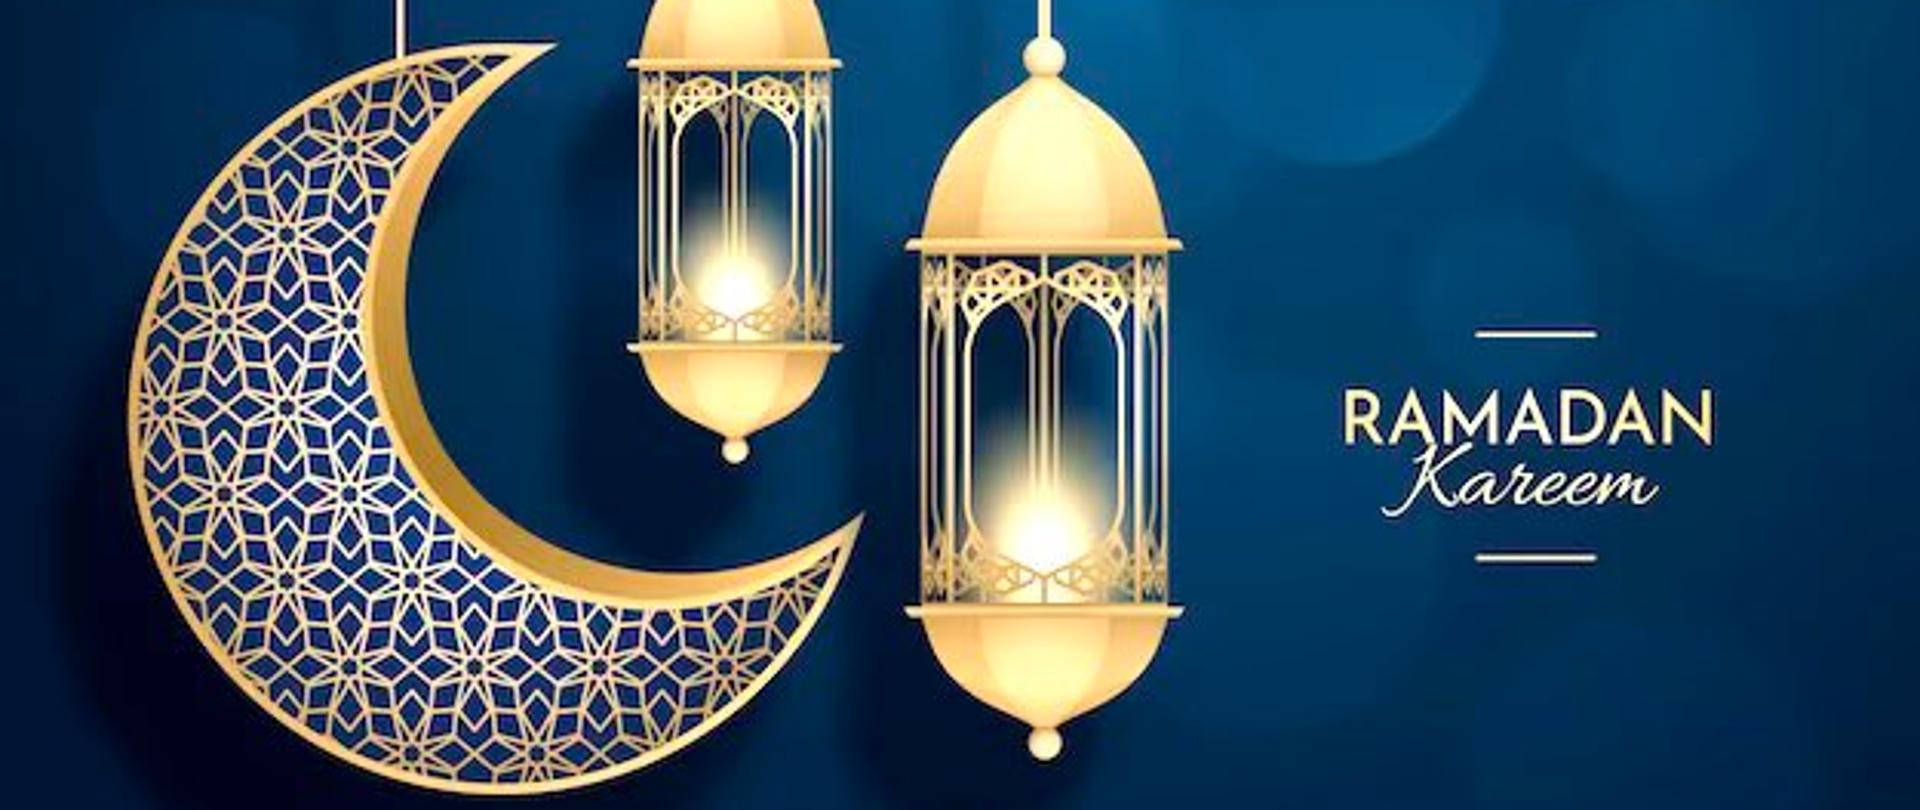 Ramadan wishes - Poland in Saudi Arabia - Gov.pl website